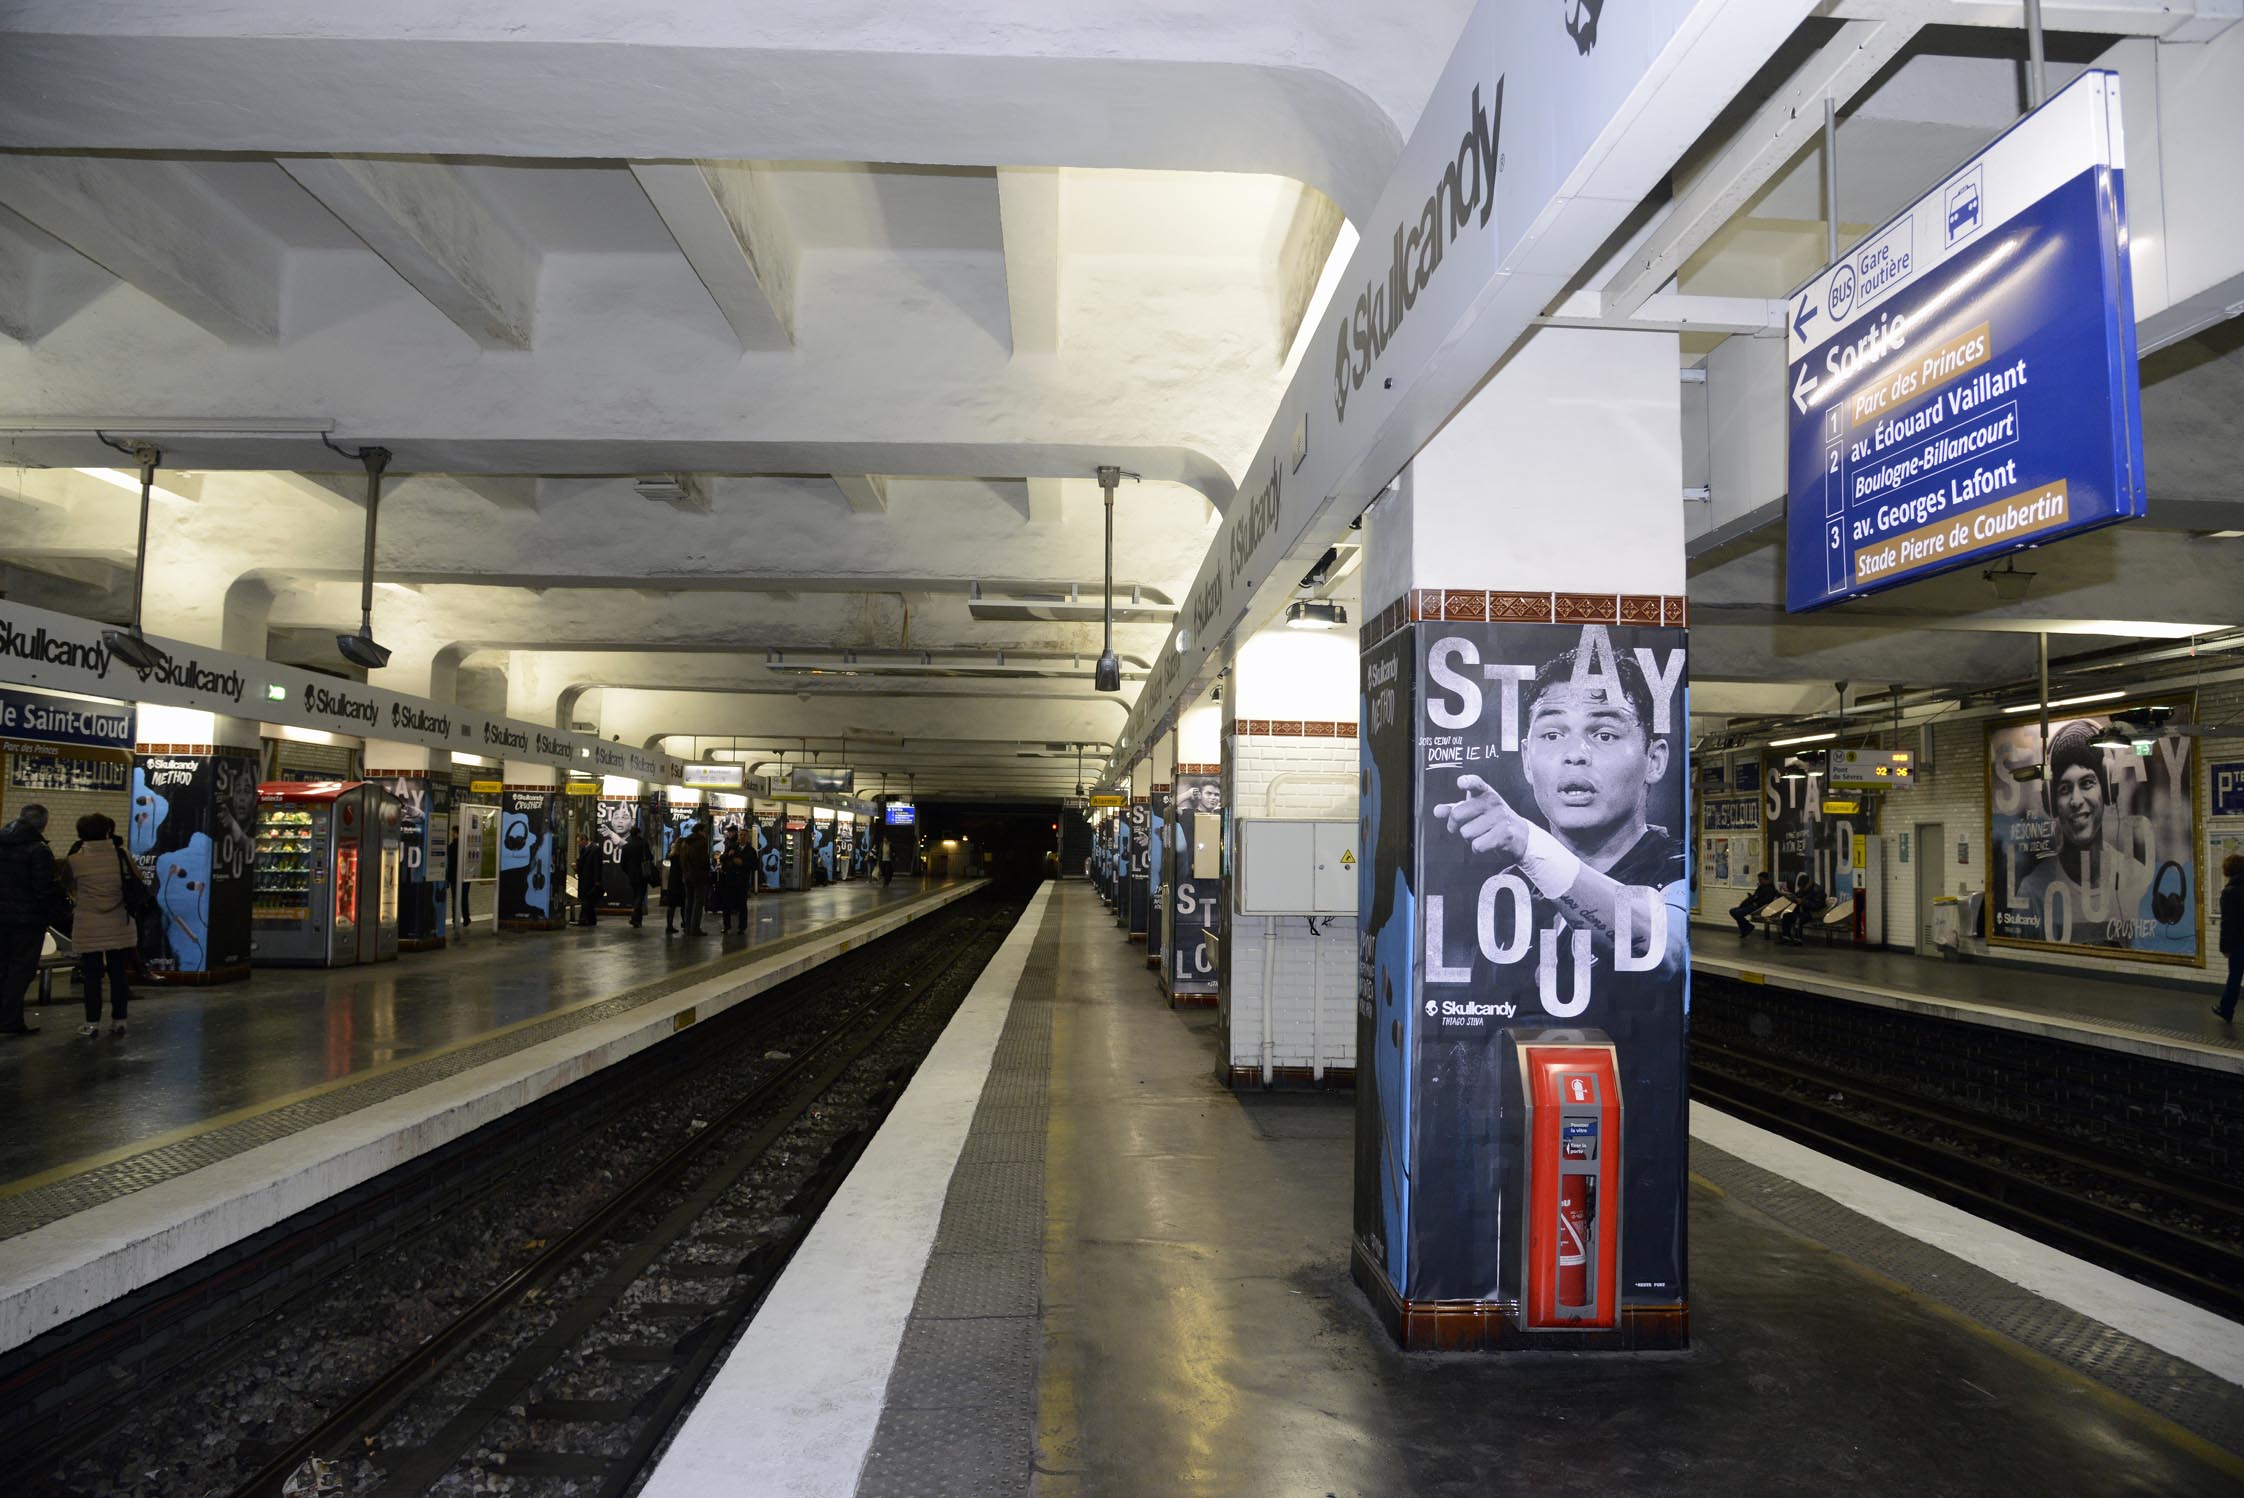 SkullCandy - thiago silva Porte de Saint-Cloud métro PSG 5